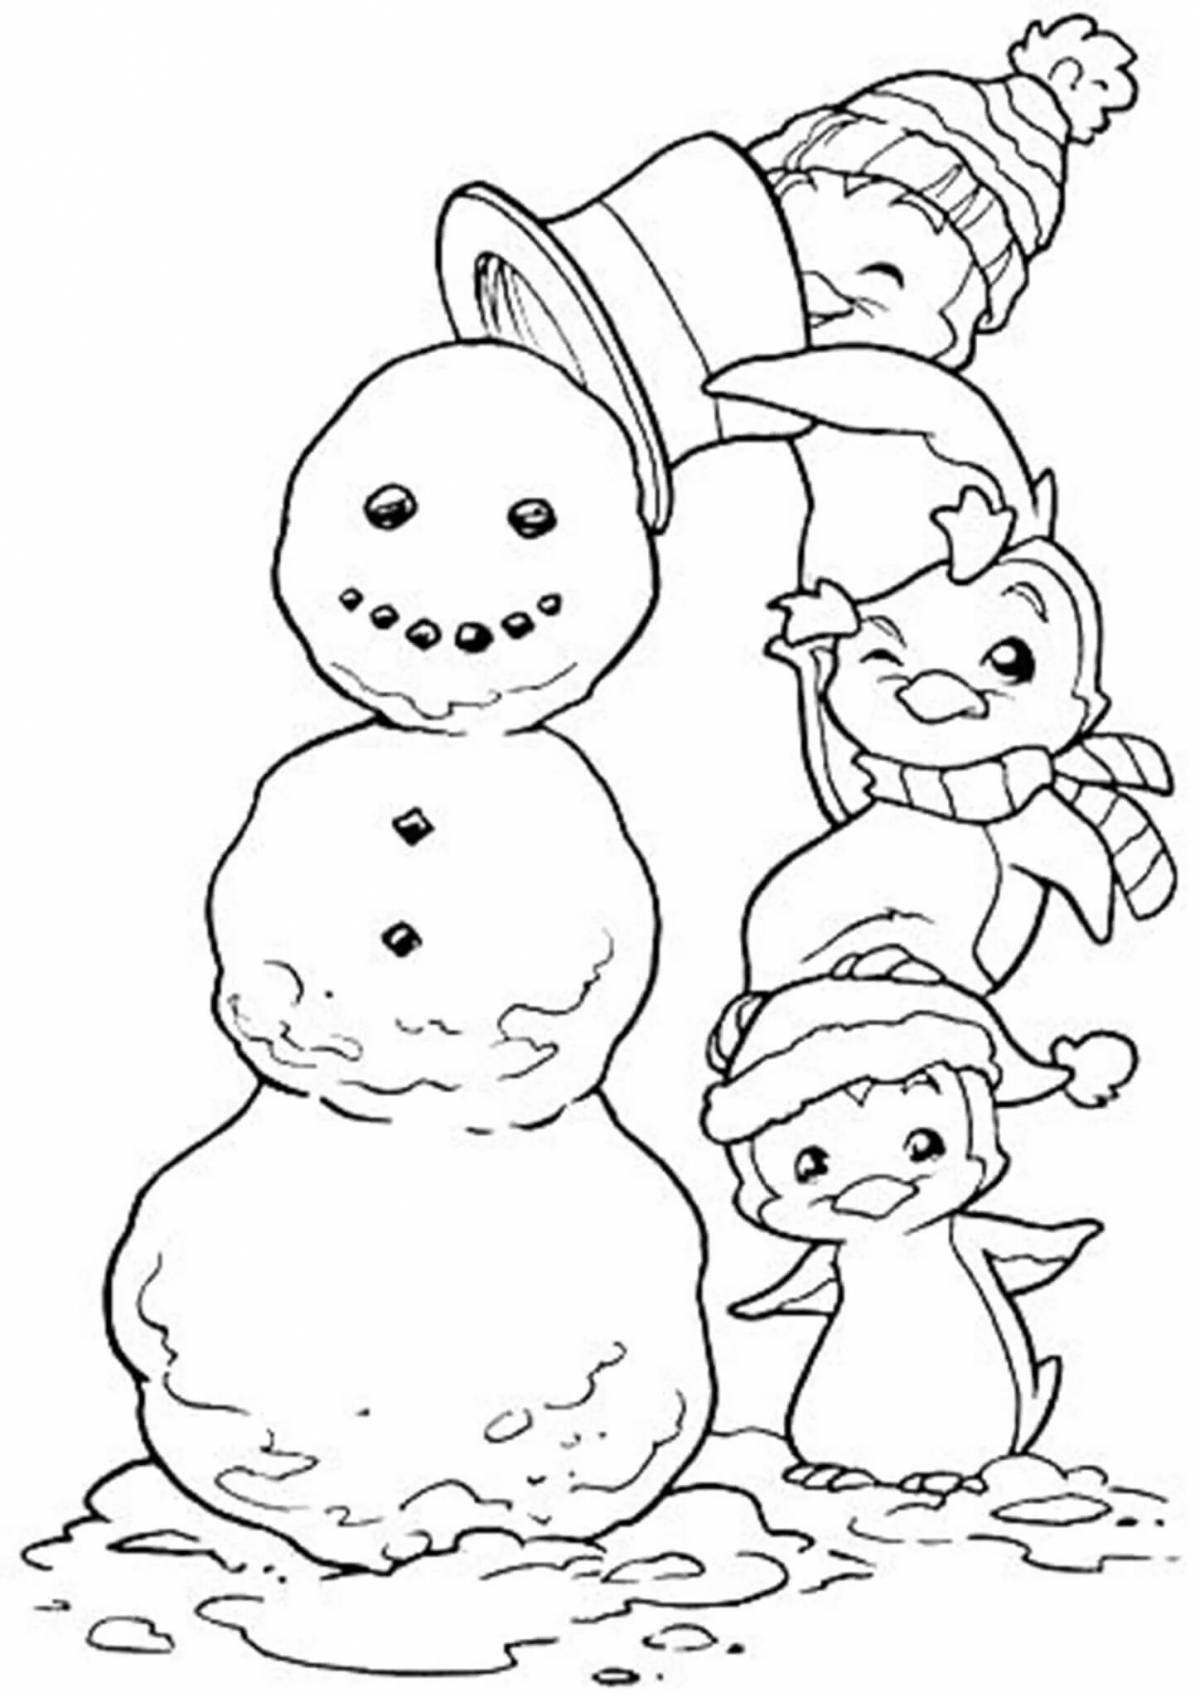 Fun coloring cute snowman